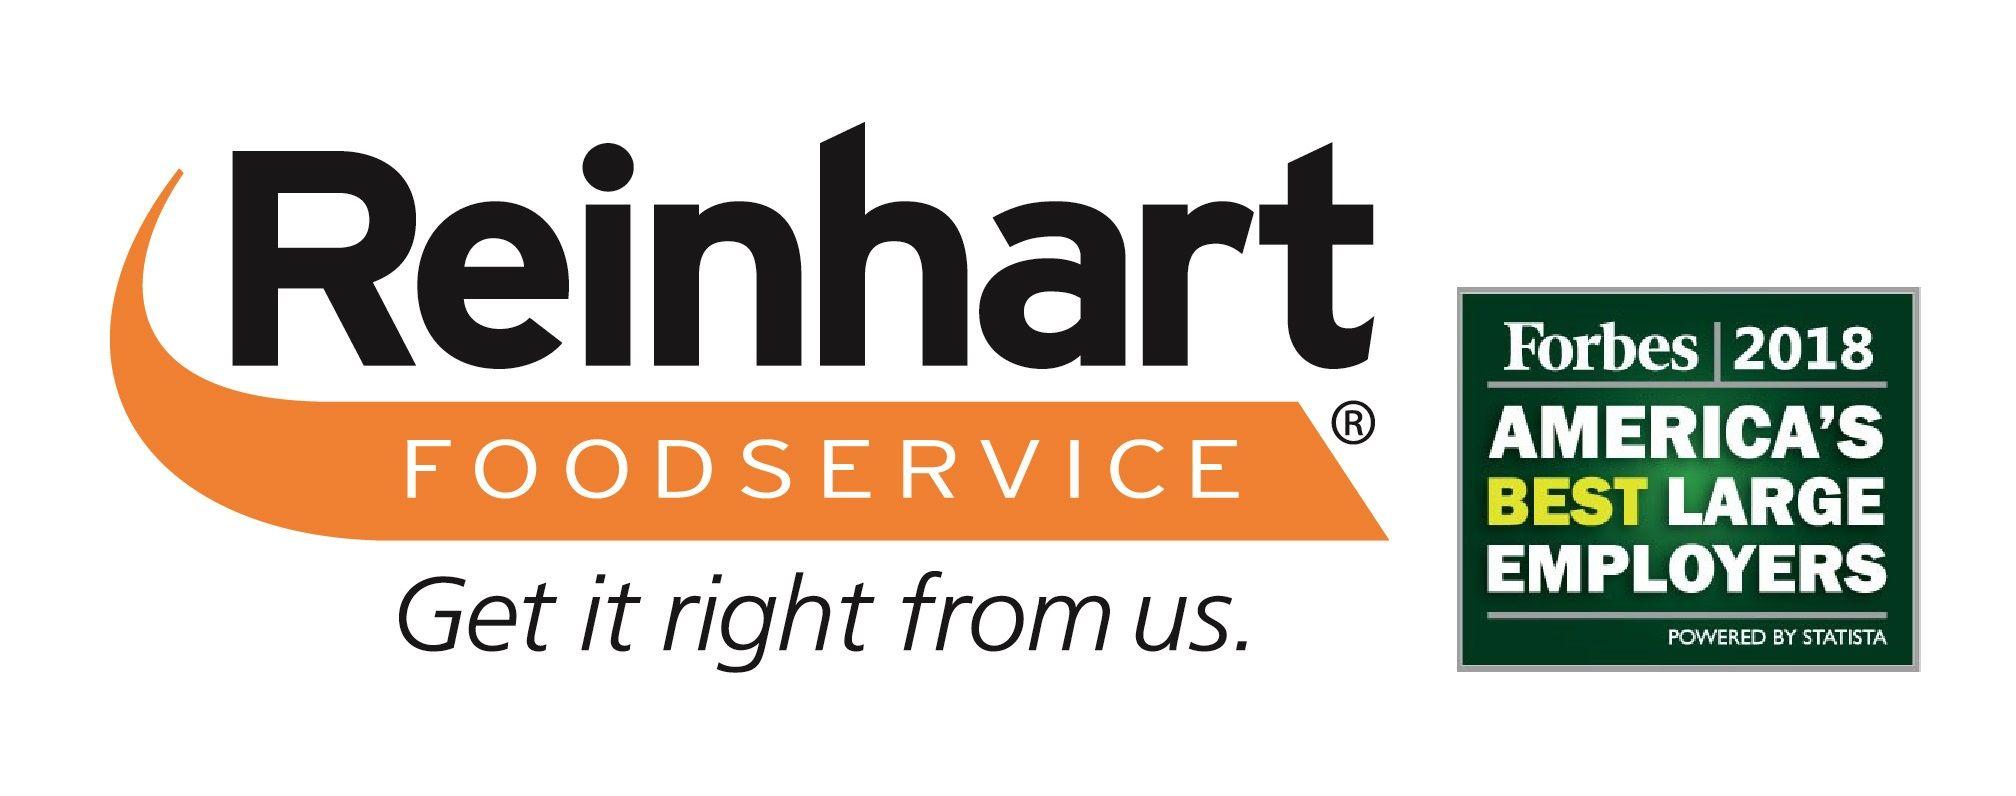 Reinhart Food Service Logo - Driving Jobs at Reinhart Foodservice - Manassas, VA